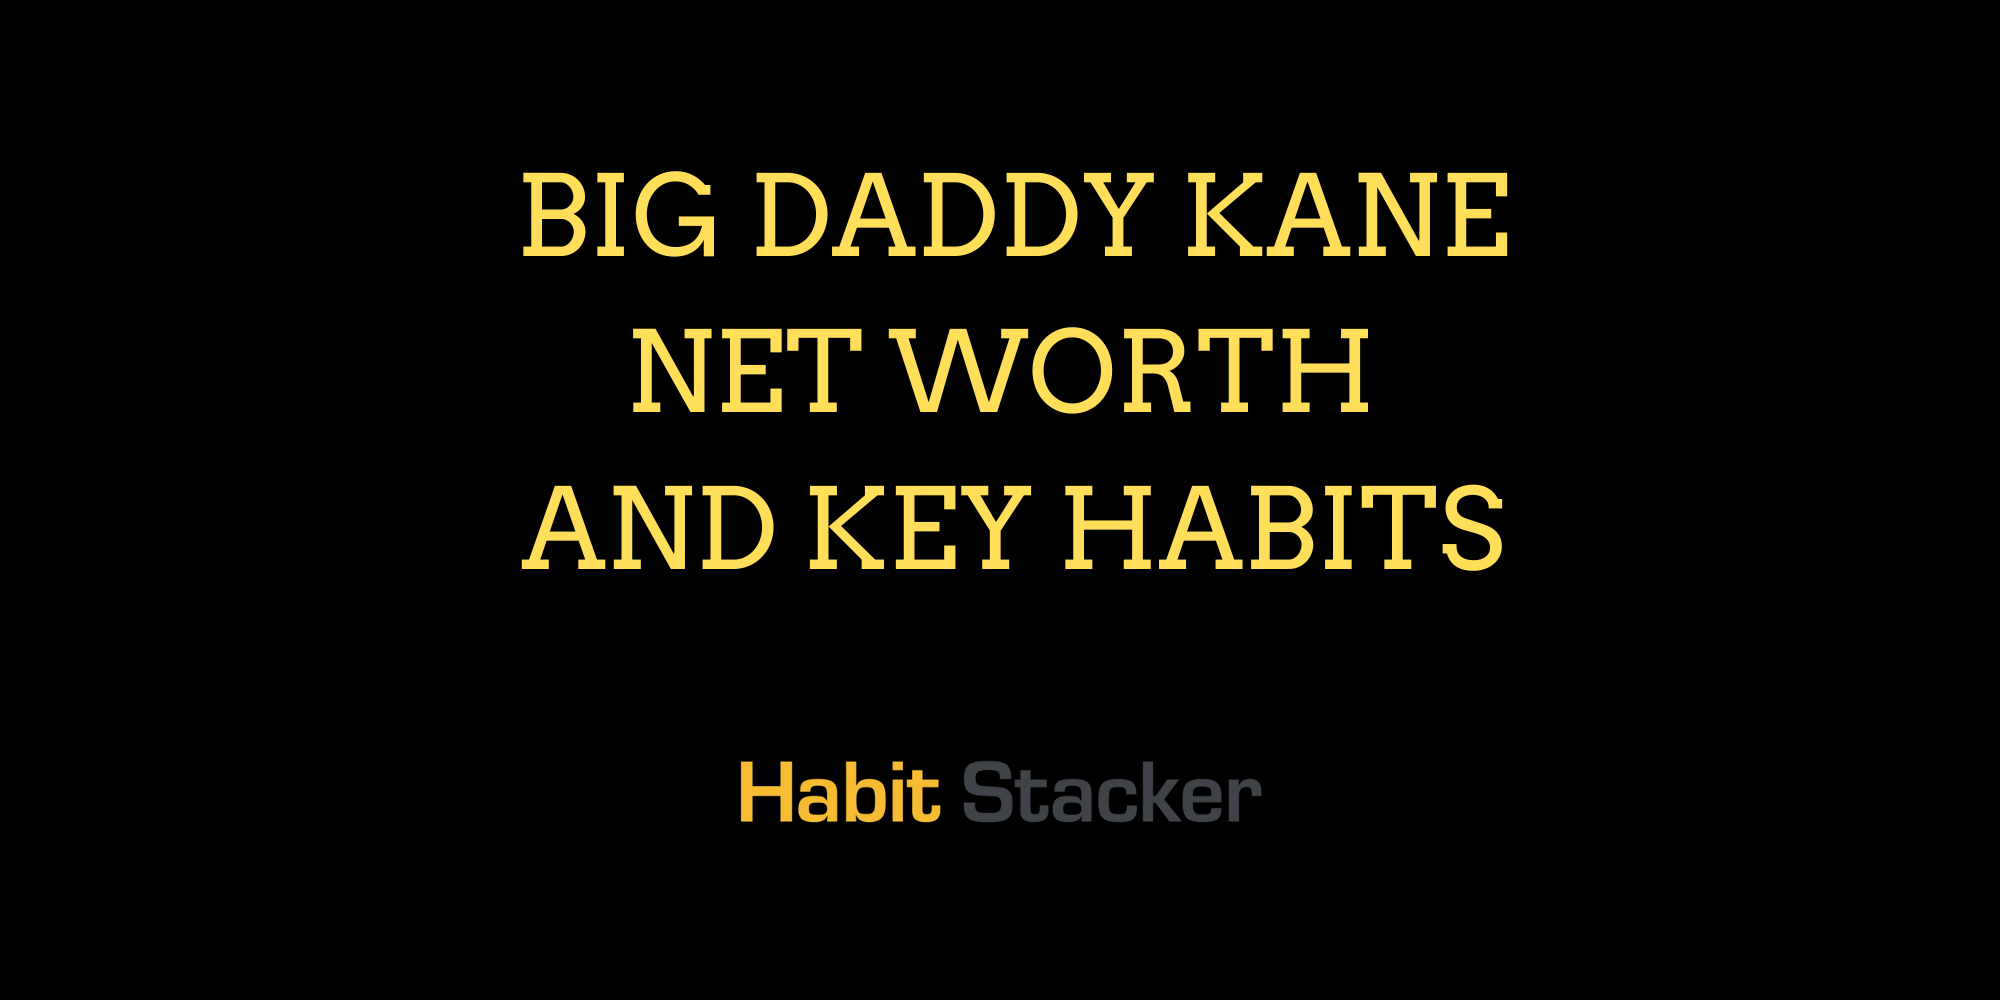 Big Daddy Kane Net worth and Key Habits